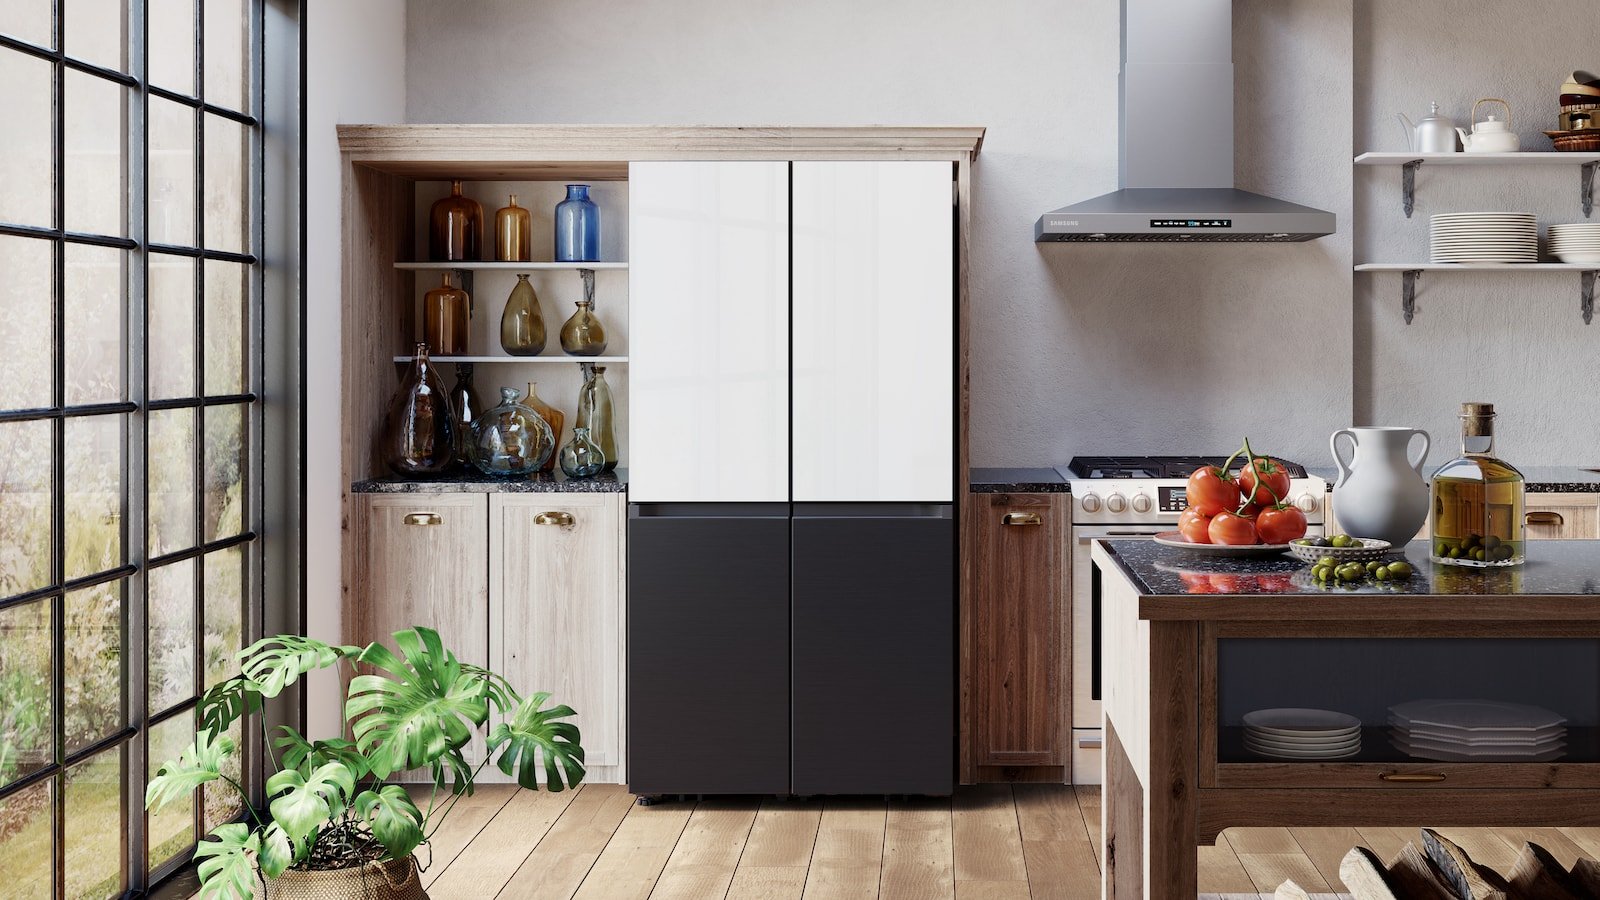 Samsung Bespoke 2021 4-Door Flex refrigerator offers customizable food management